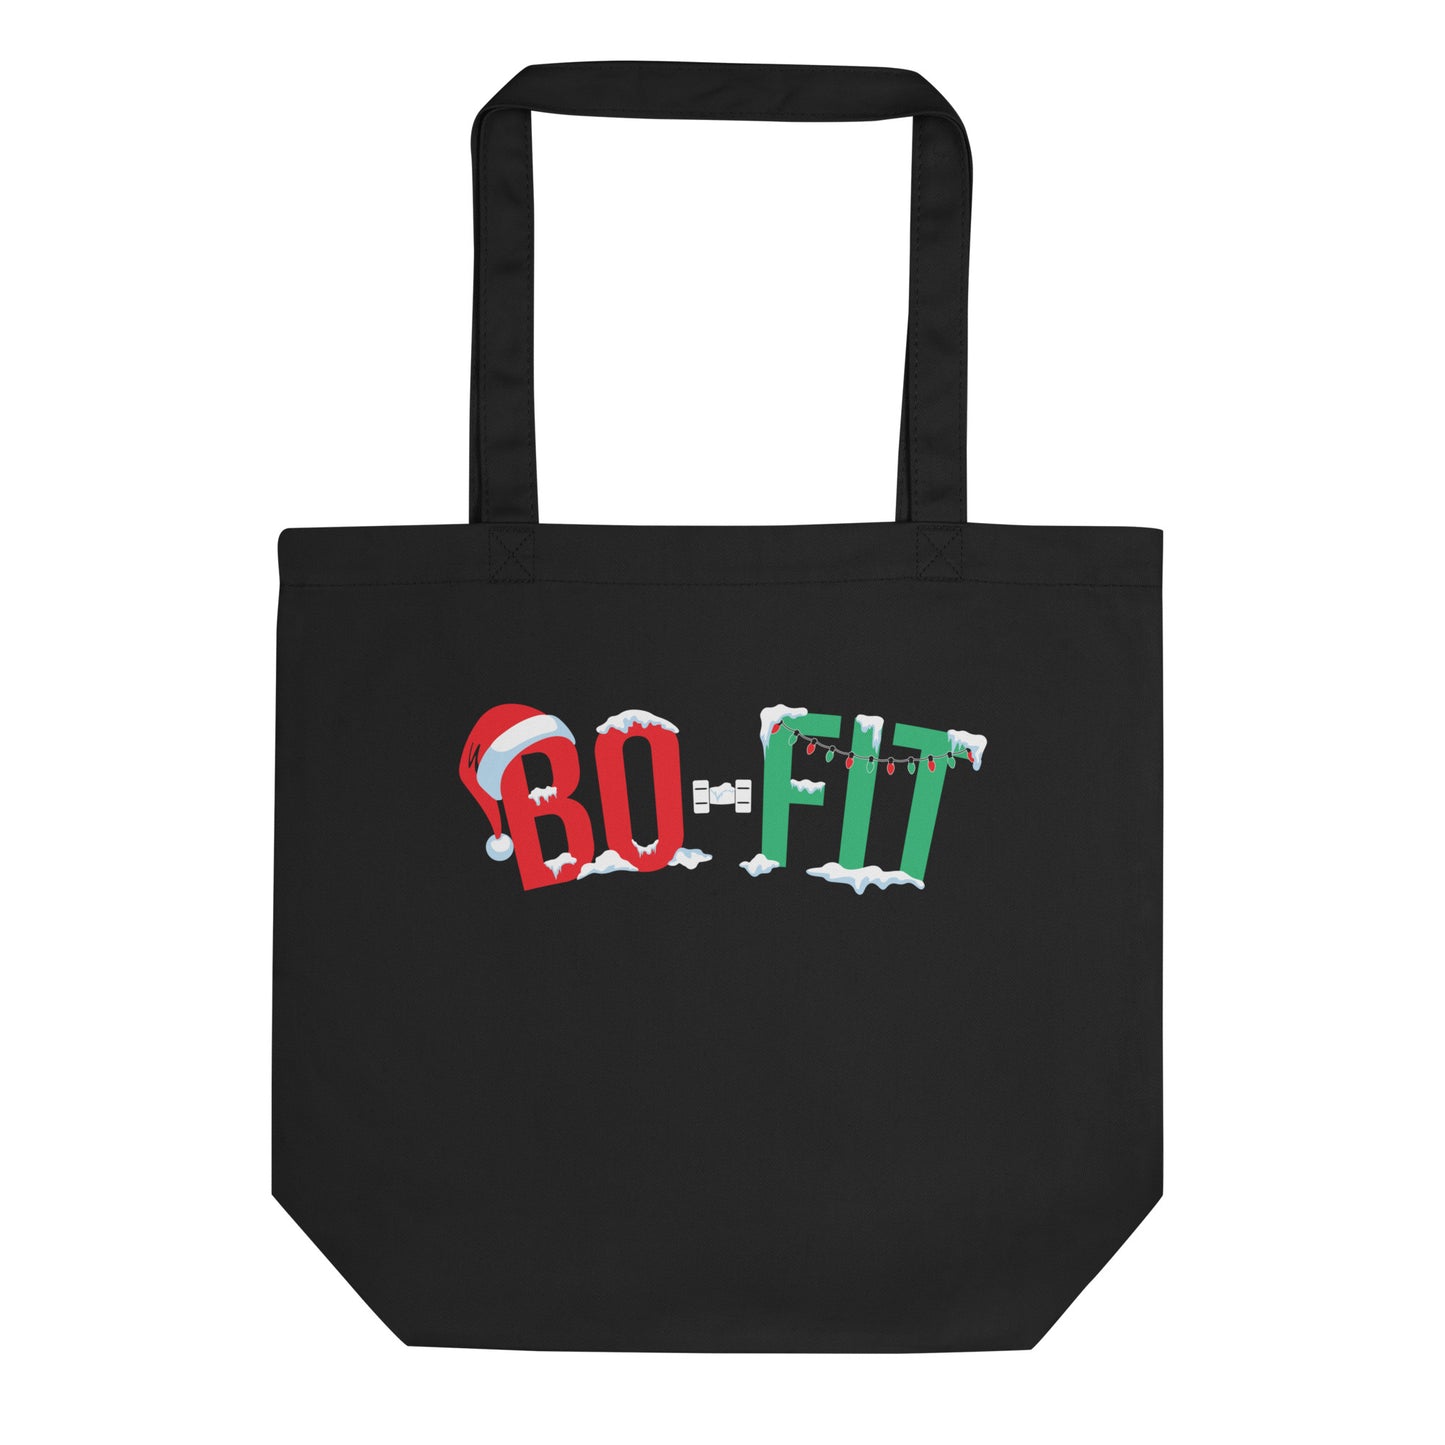 Eco Tote Bag | Christmas at Bo-Fit